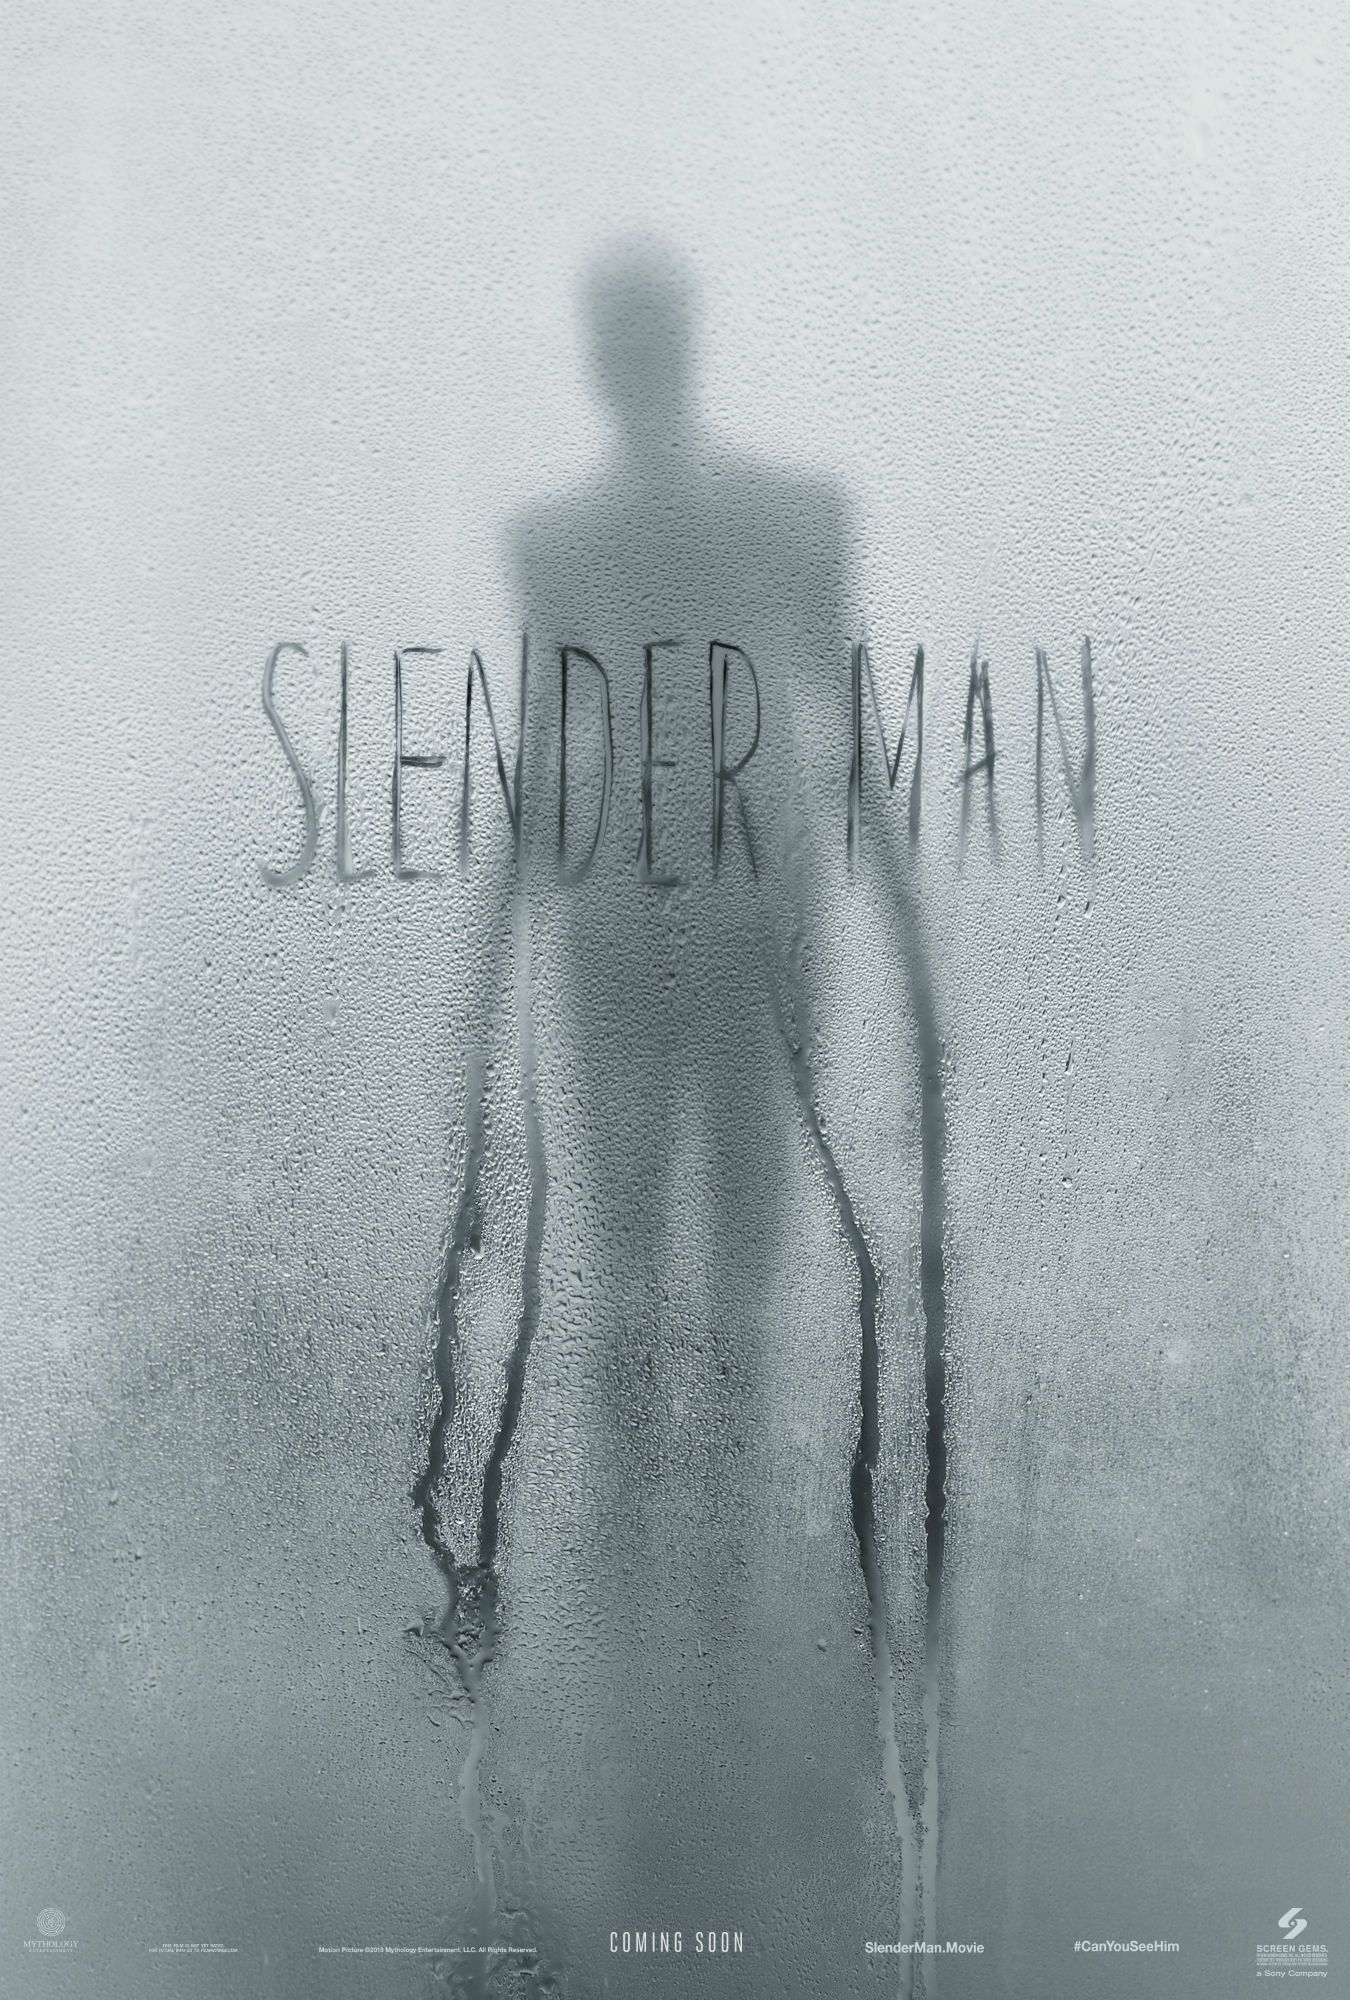 A Review Too Far - Slender Man